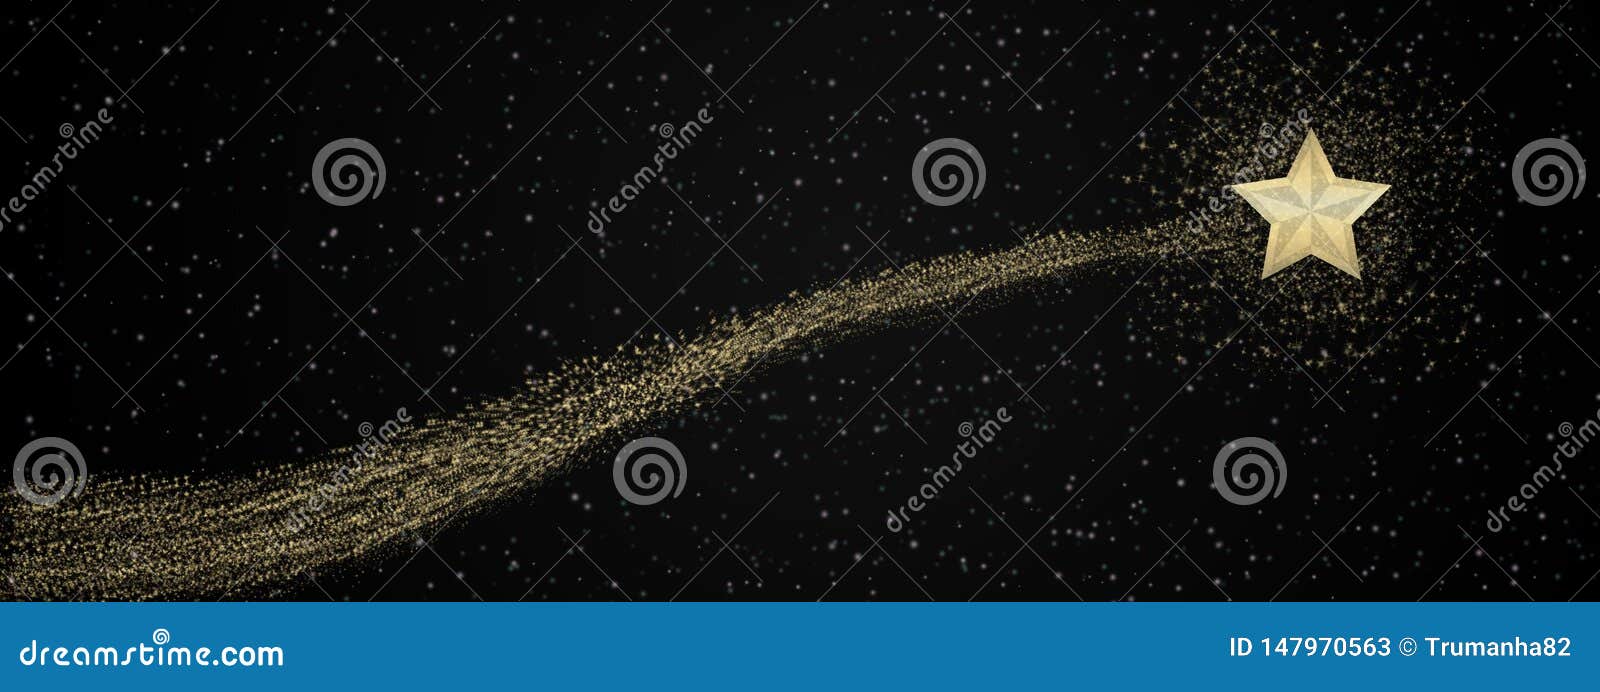 Glittering Golden Shooting Star In Dark Night Sky Stock Illustration Illustration Of Cosmos Banners